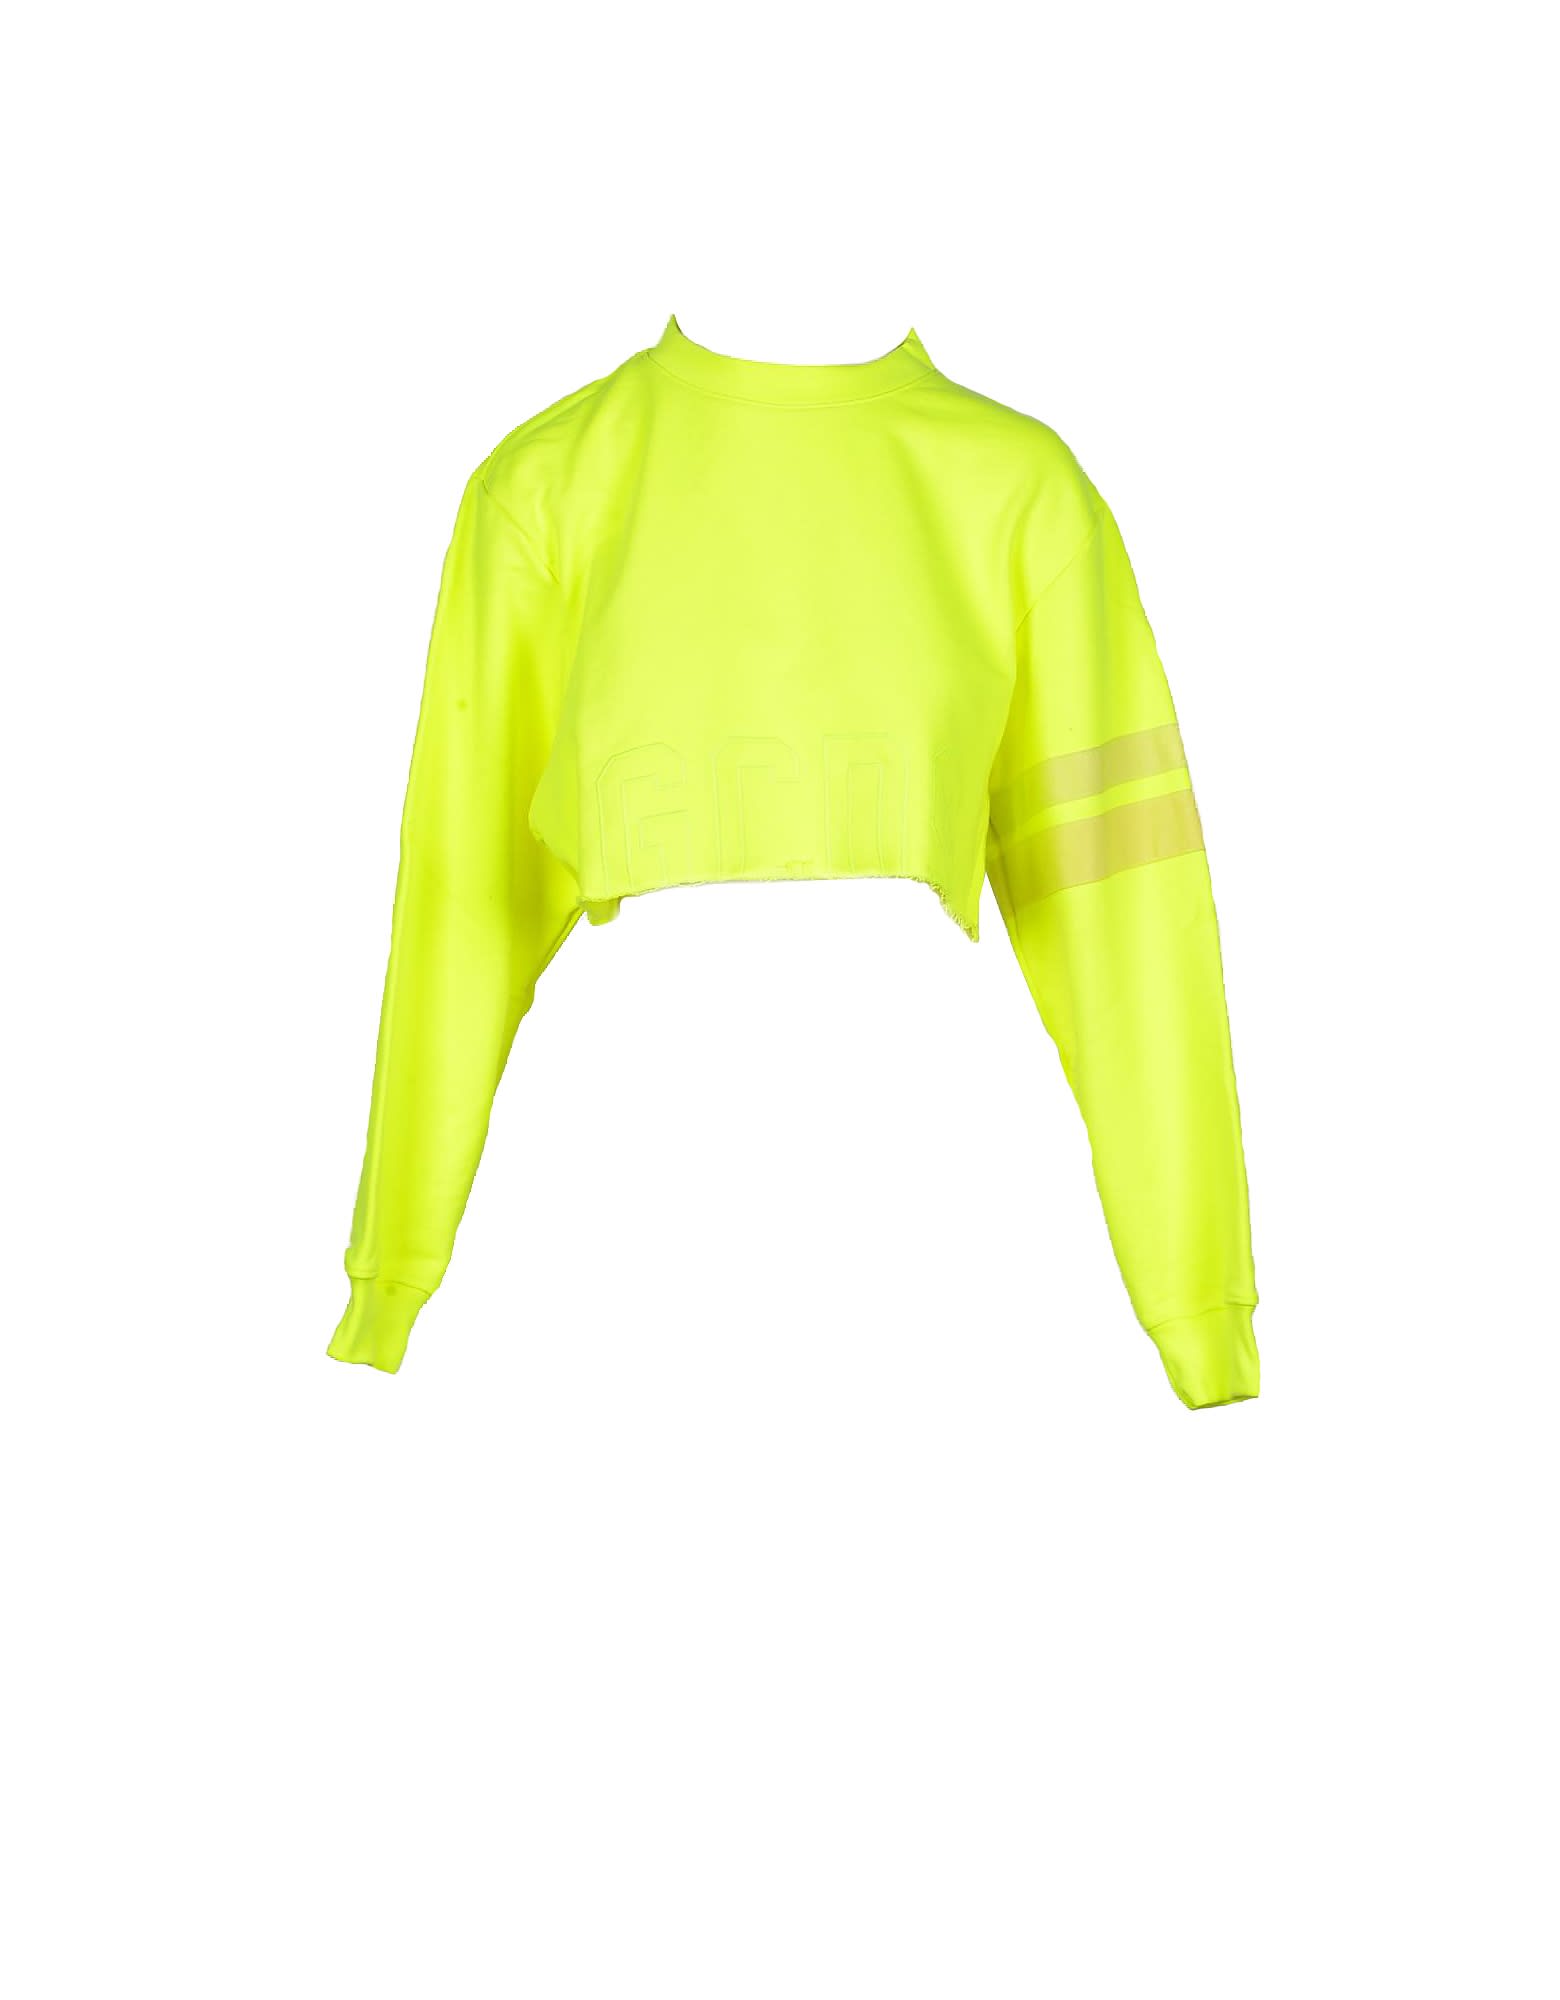 Gcds Neon Yellow Womens Croppet Sweatshirt